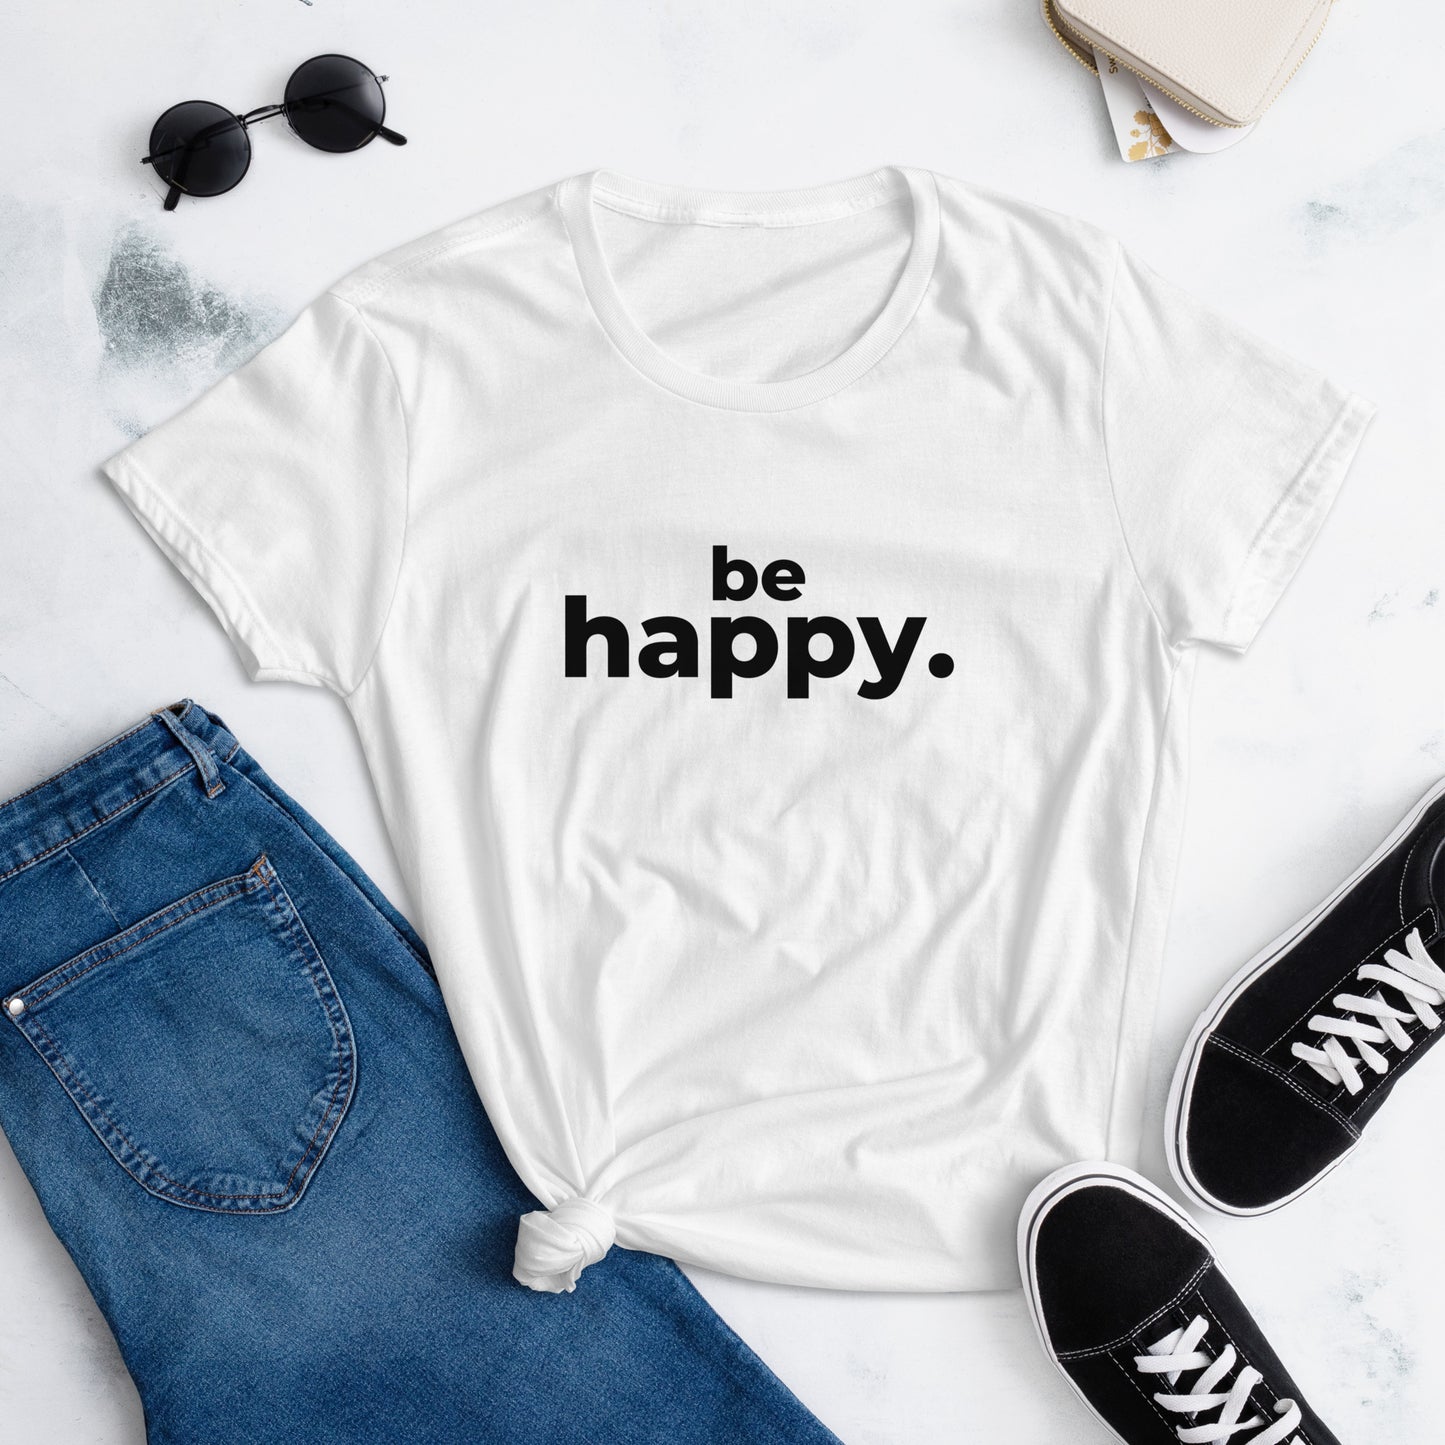 BE HAPPY - Women's short sleeve t-shirt